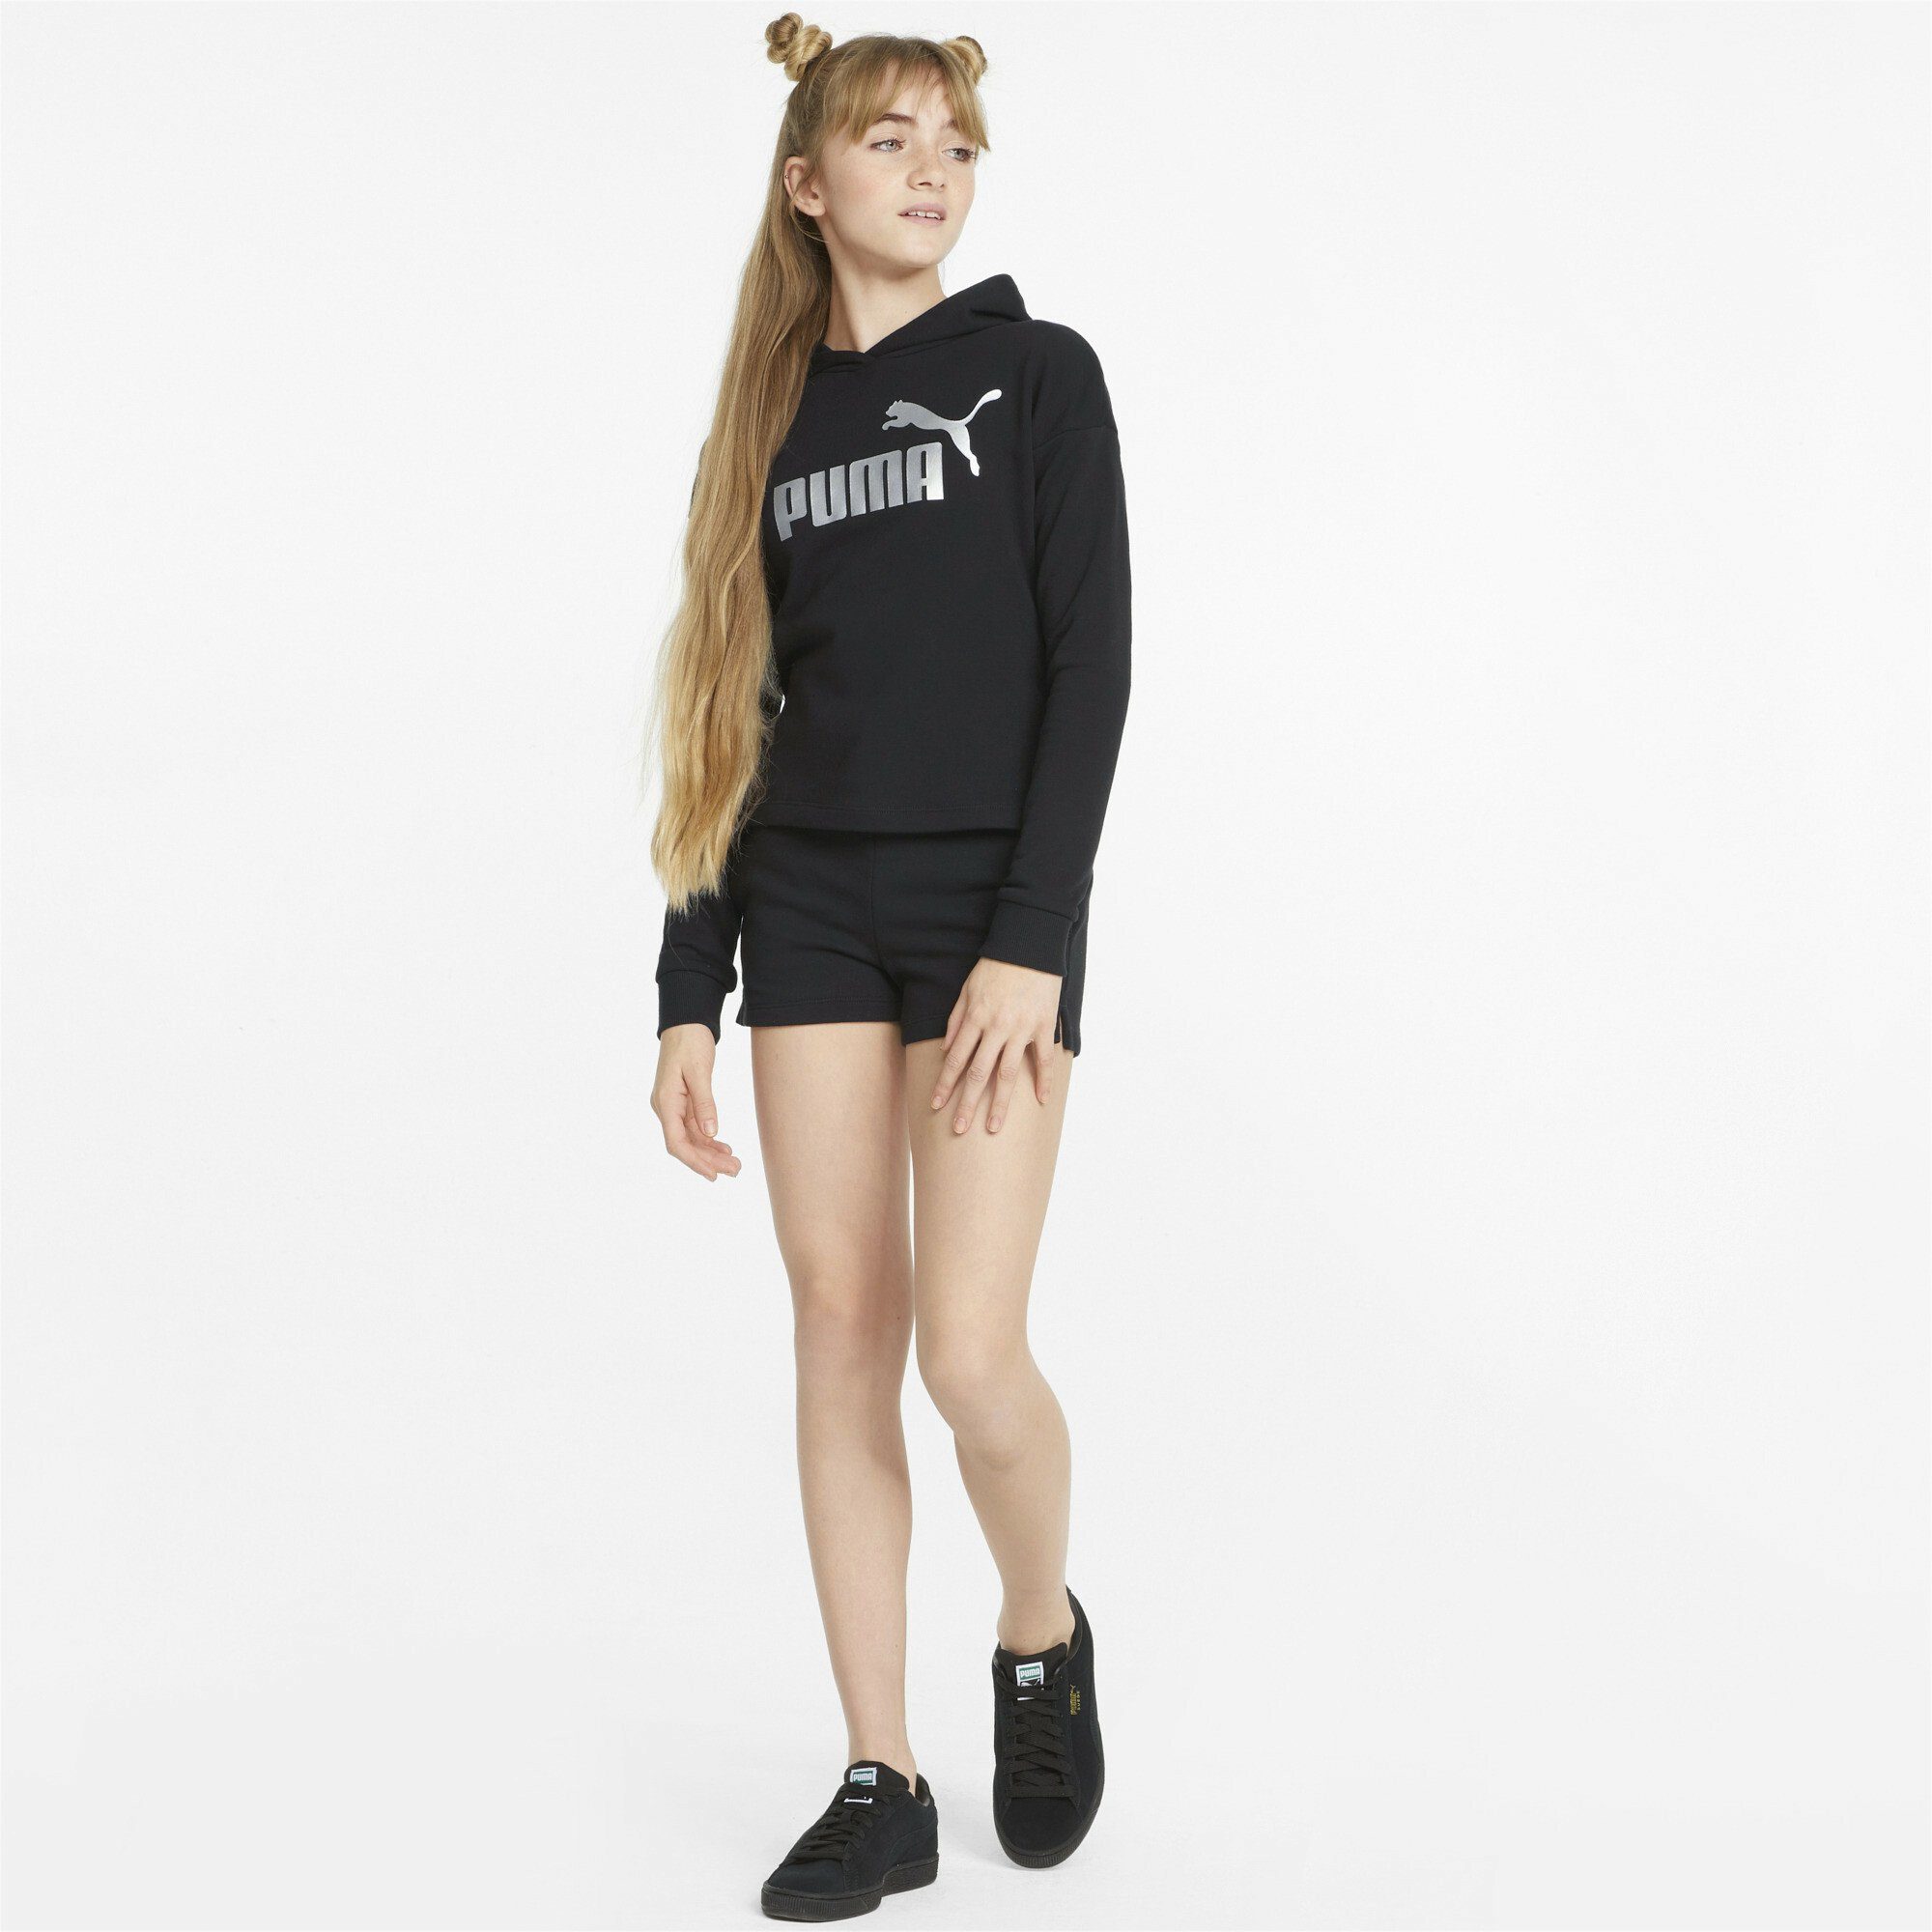 PUMA Mädchen Shorts Sporthose Black Essentials+